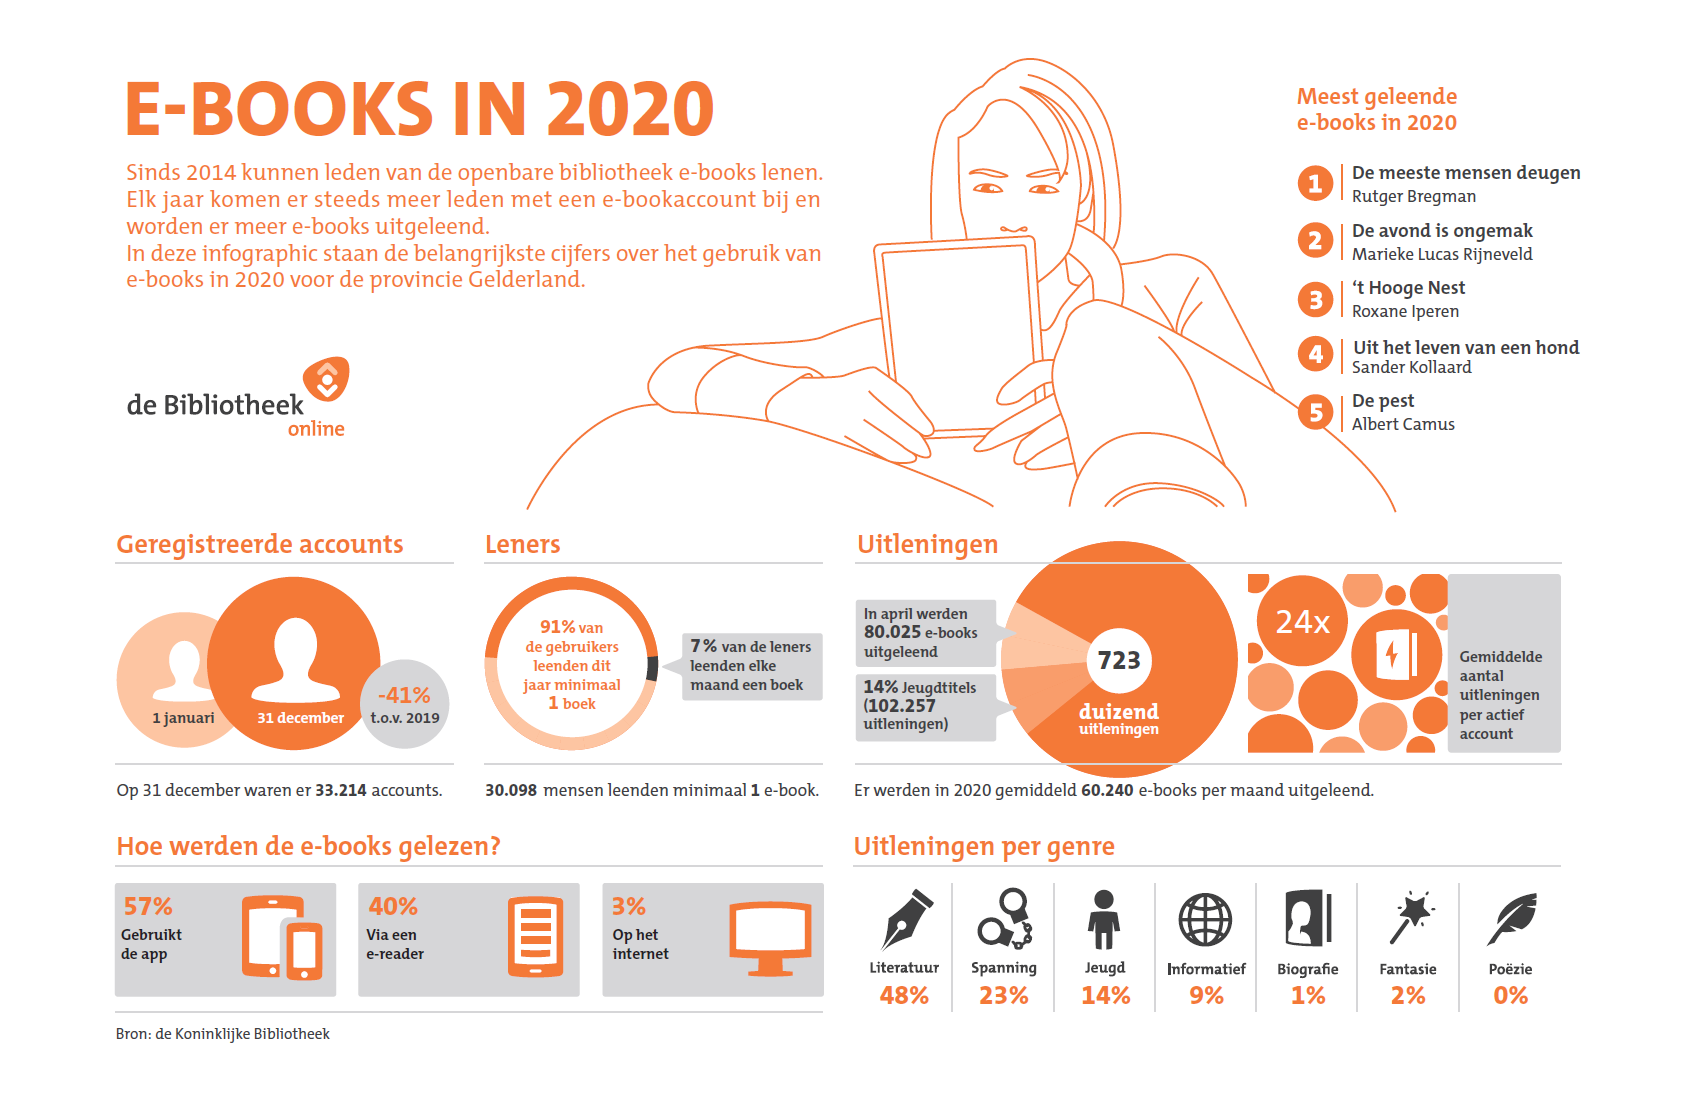 Boek als basis - E-books in 2020